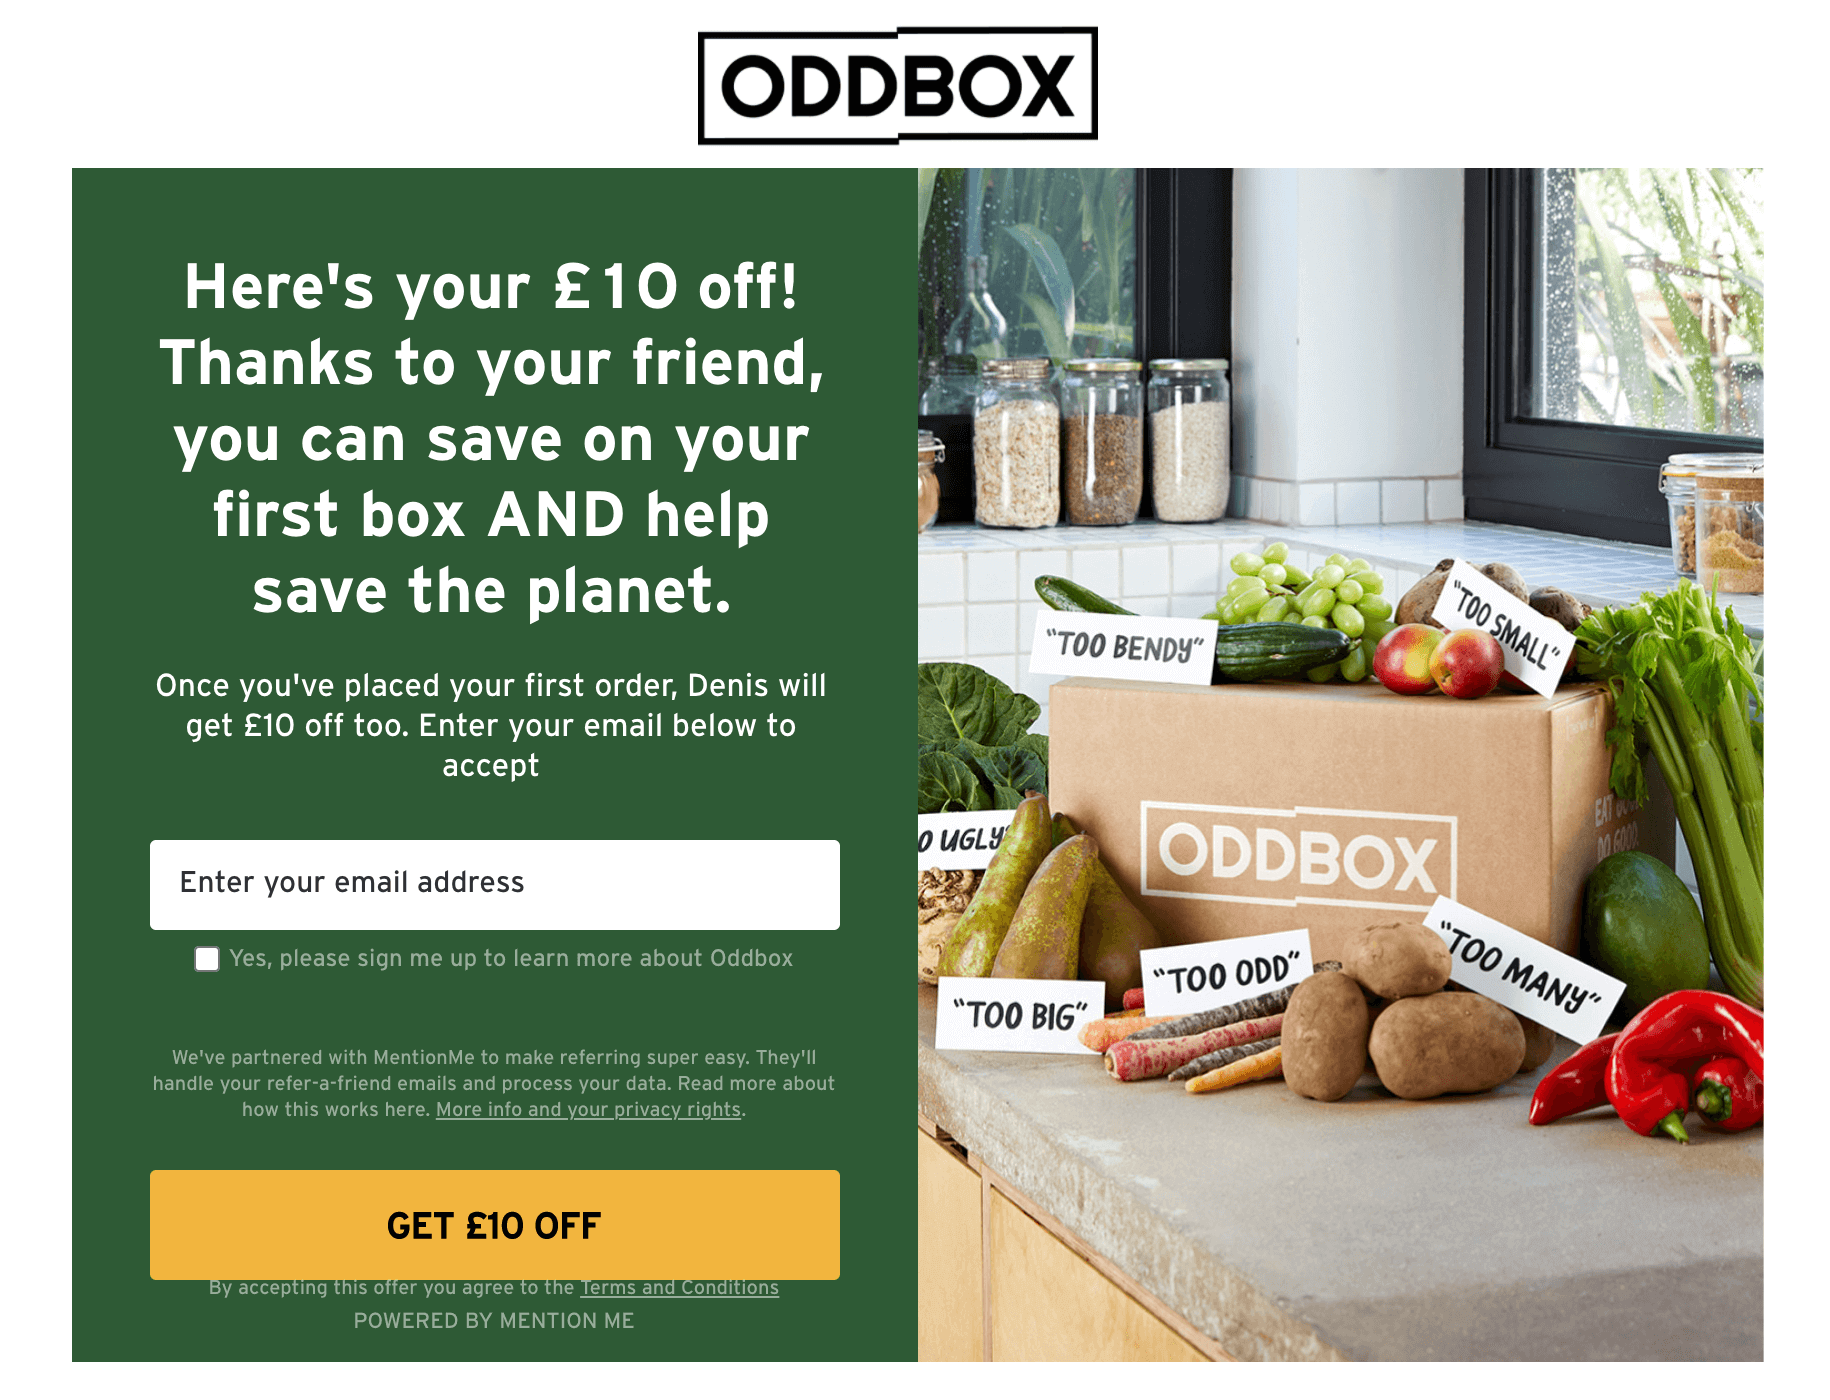 Oddbox Referral Code Get 10 To Spend With Oddbox Promo Code Uk